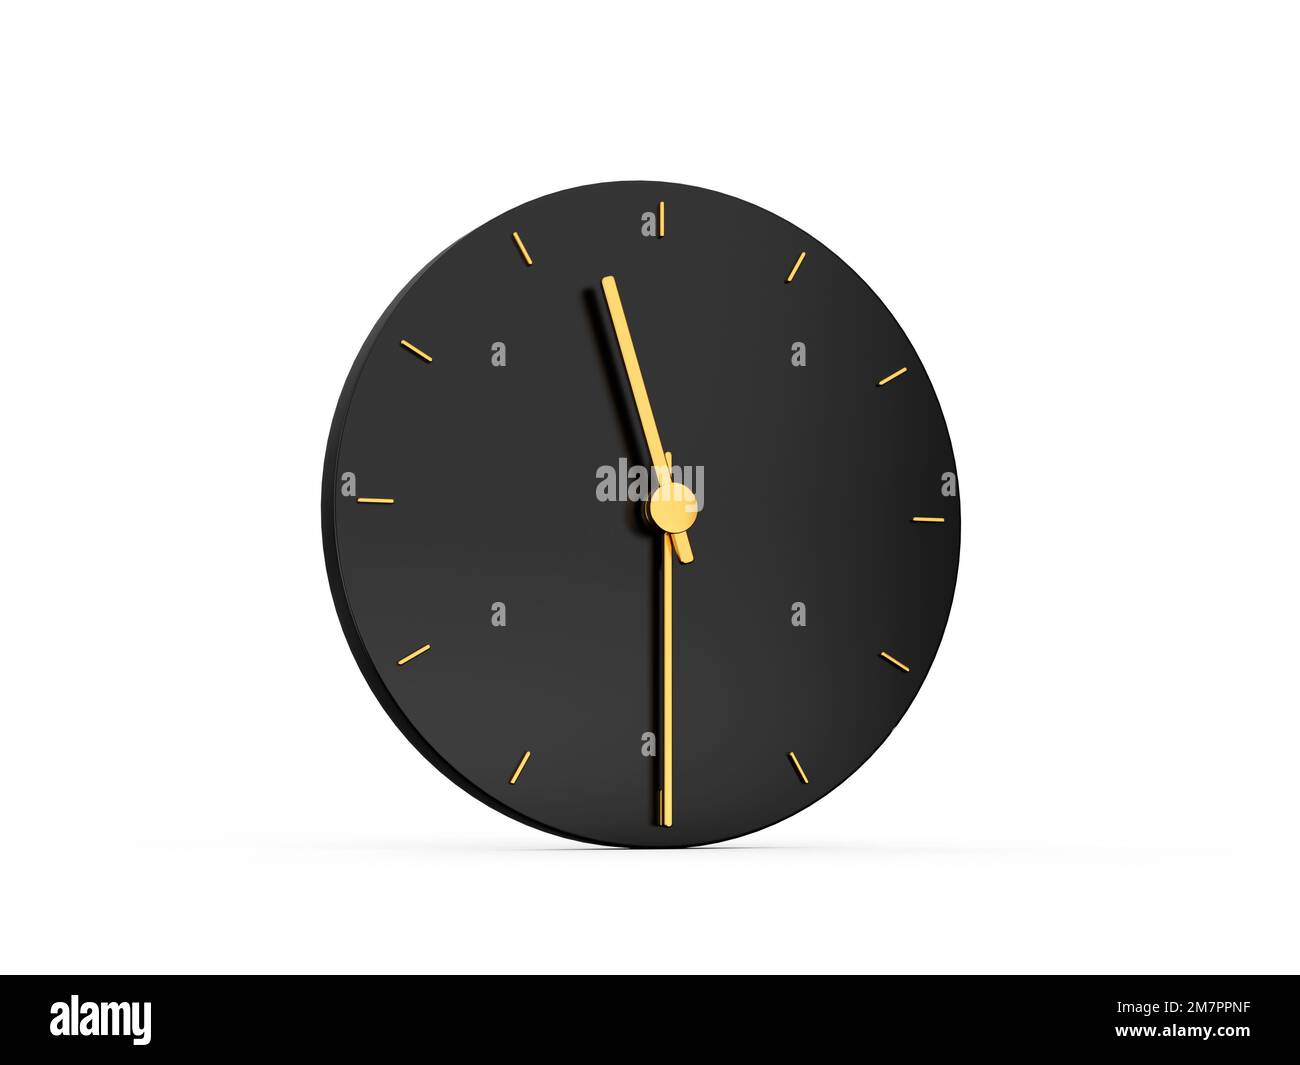 A minimalistic black and gold clock illustration showing half past eleven o'clock Stock Photo